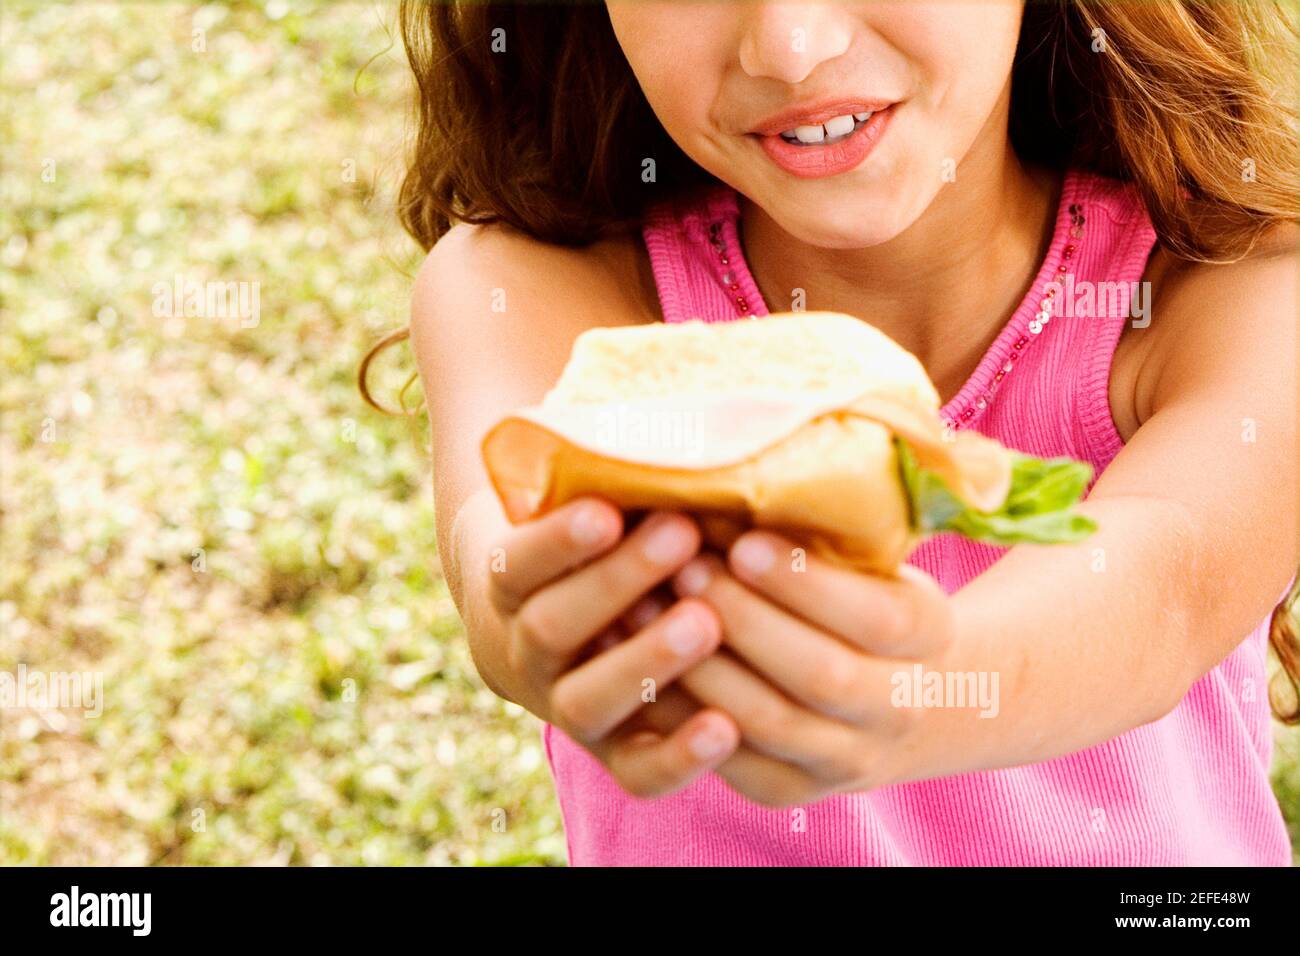 Close-up of a girl holding a hamburger Stock Photo